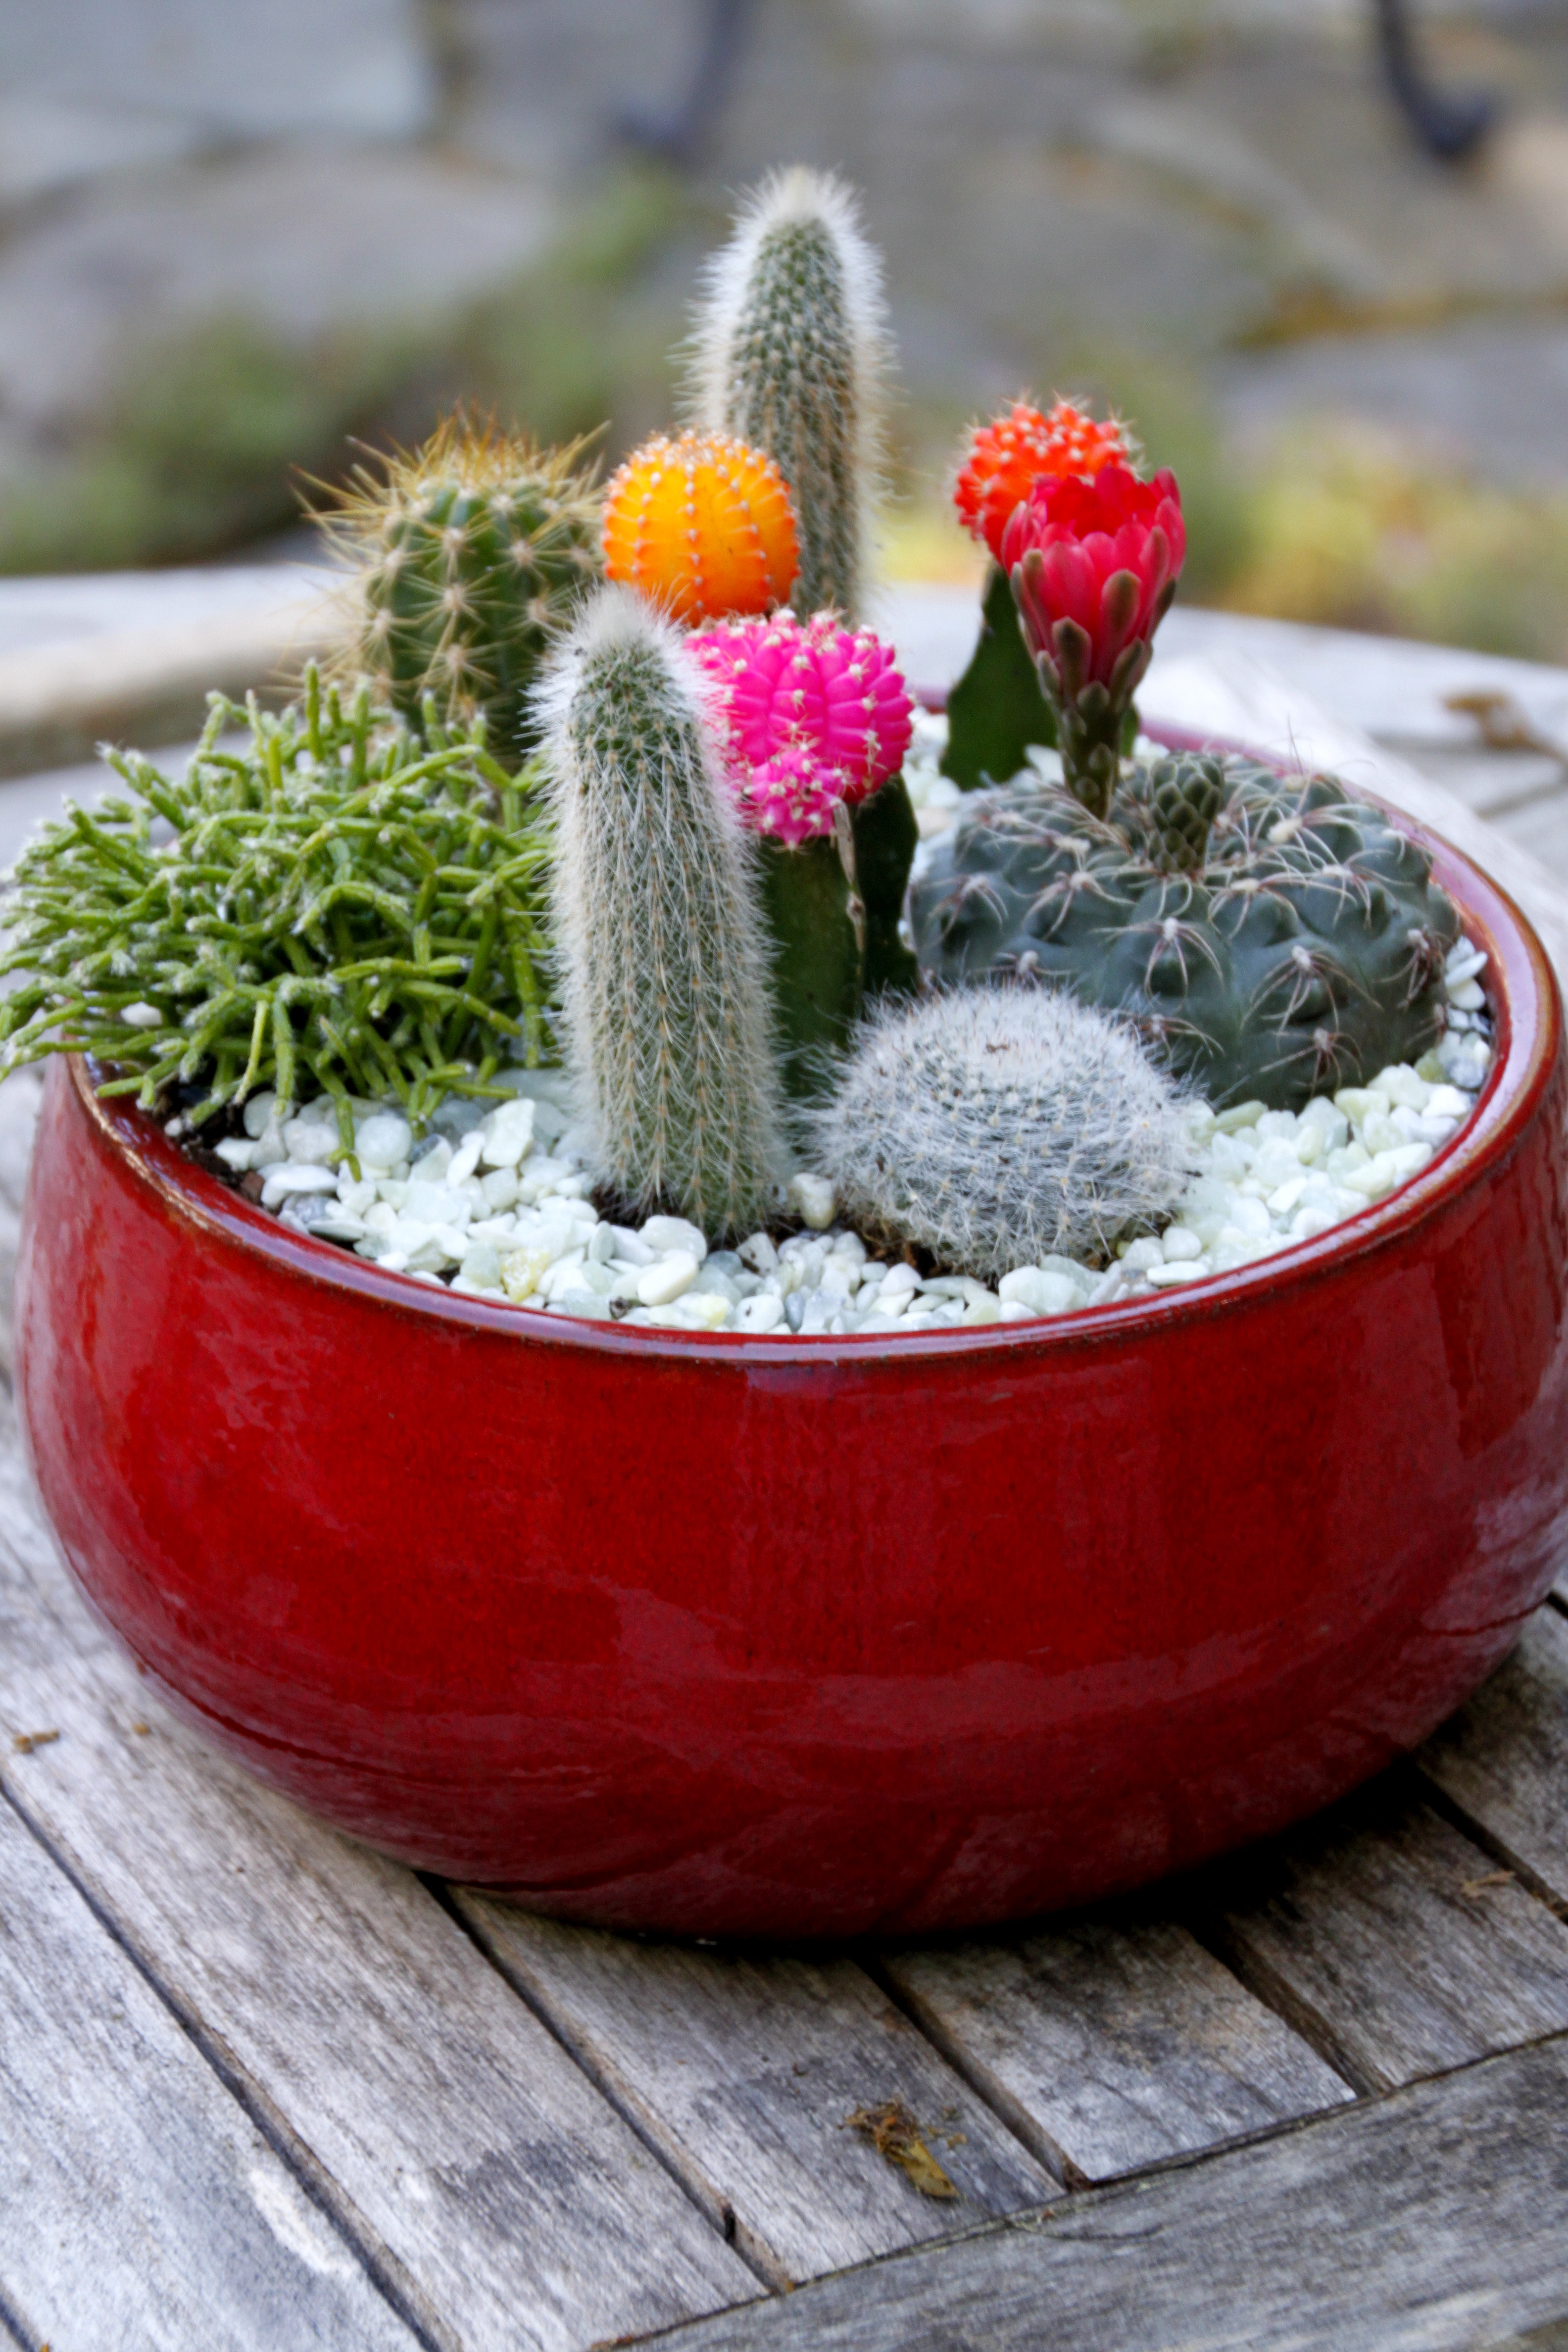 Cactus display plate